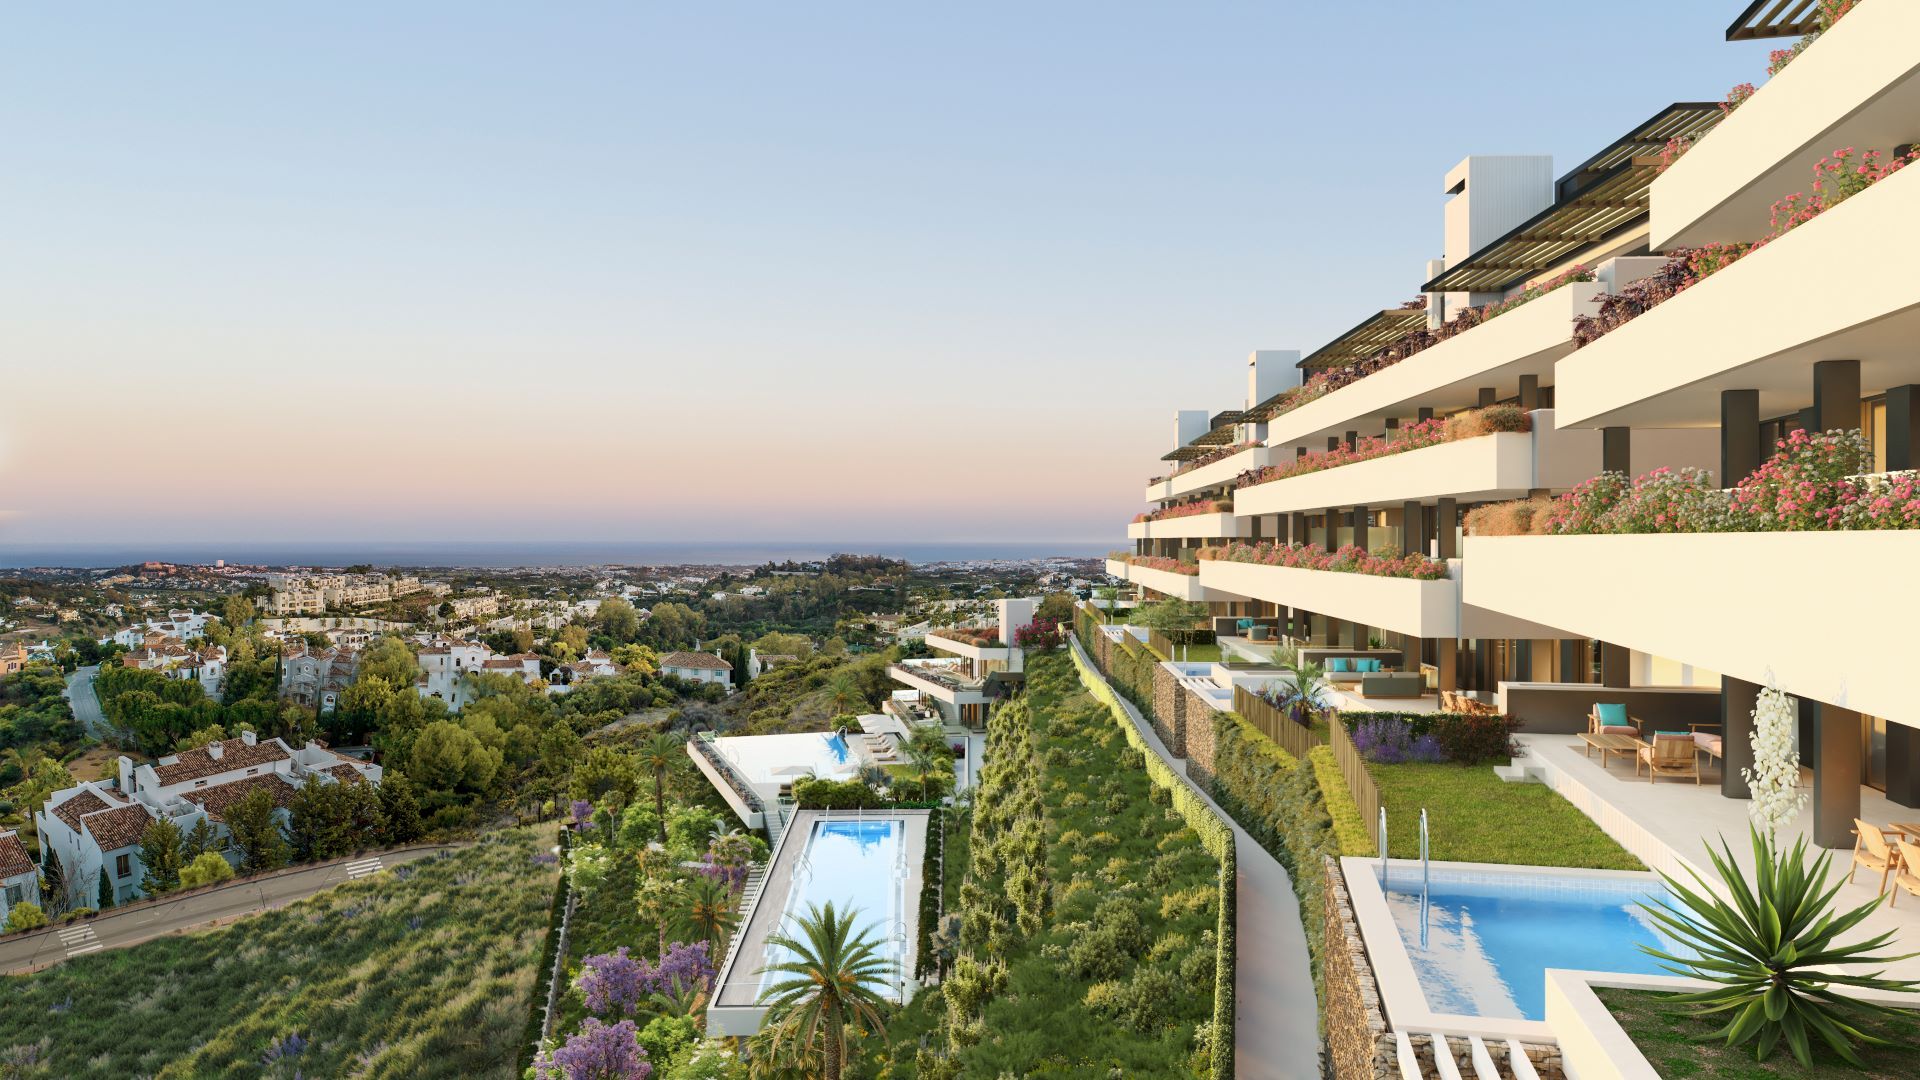 Beautiful apartment with amazing views | Engel & Völkers Marbella